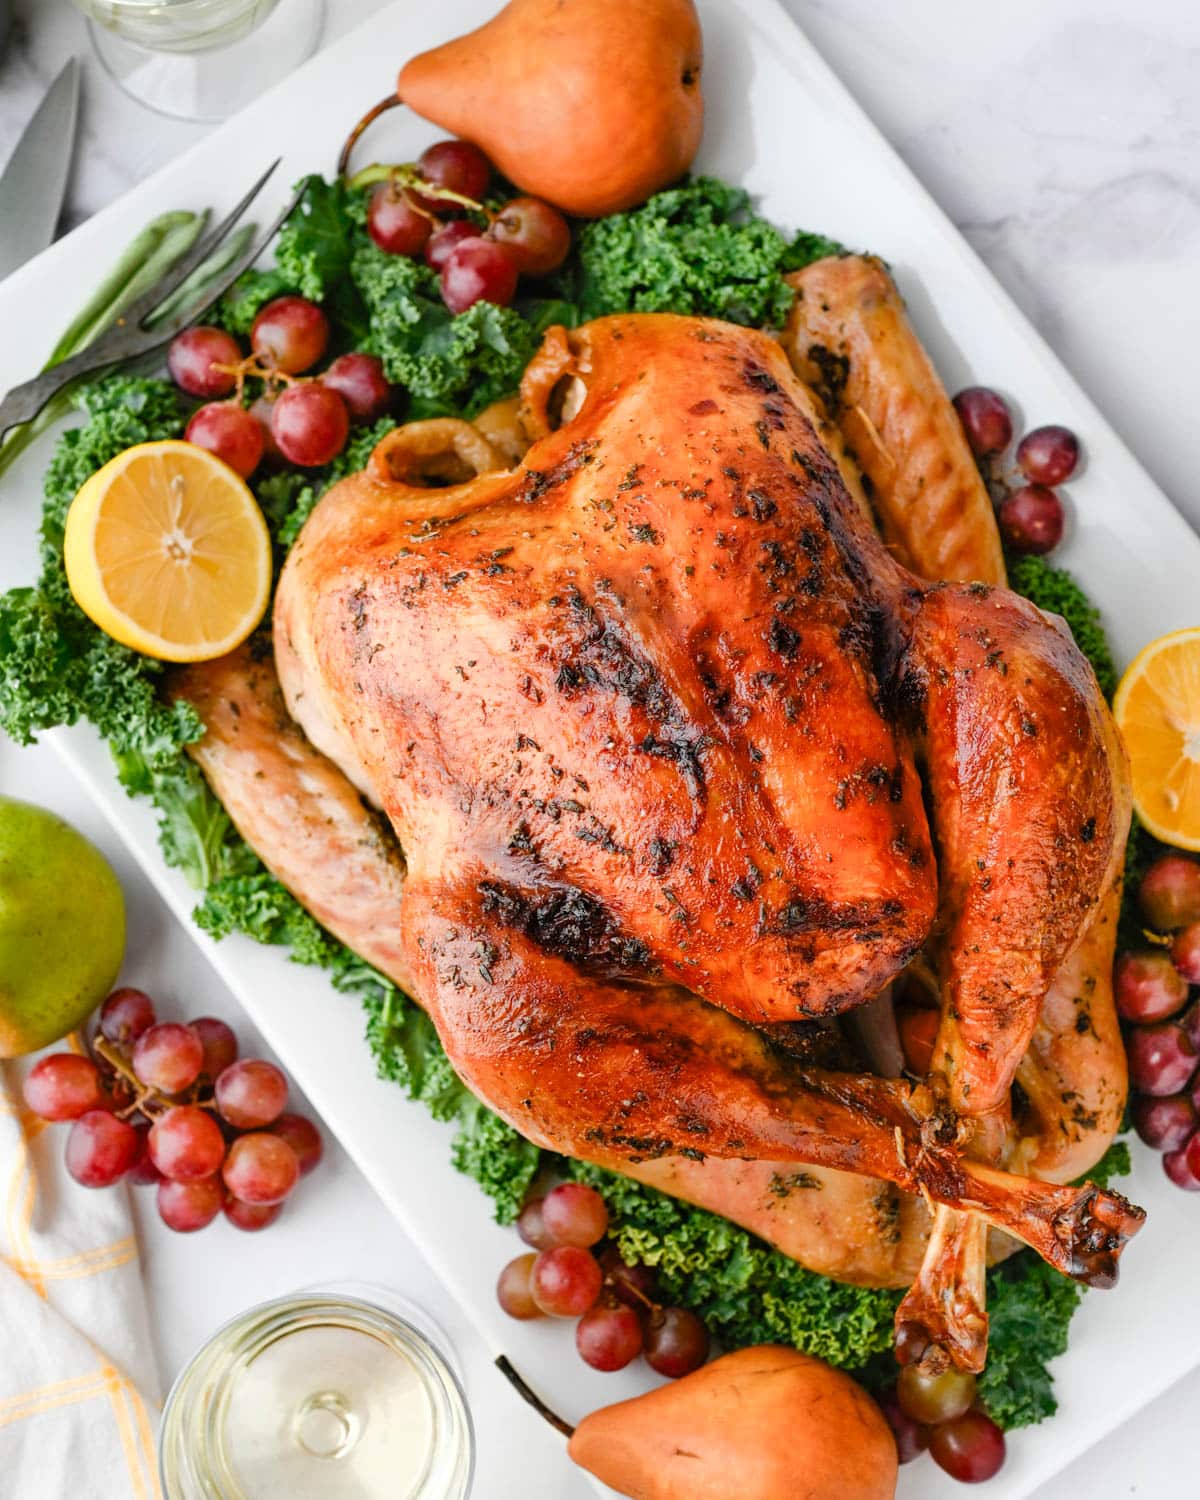 A whole roast turkey on a serving platter.